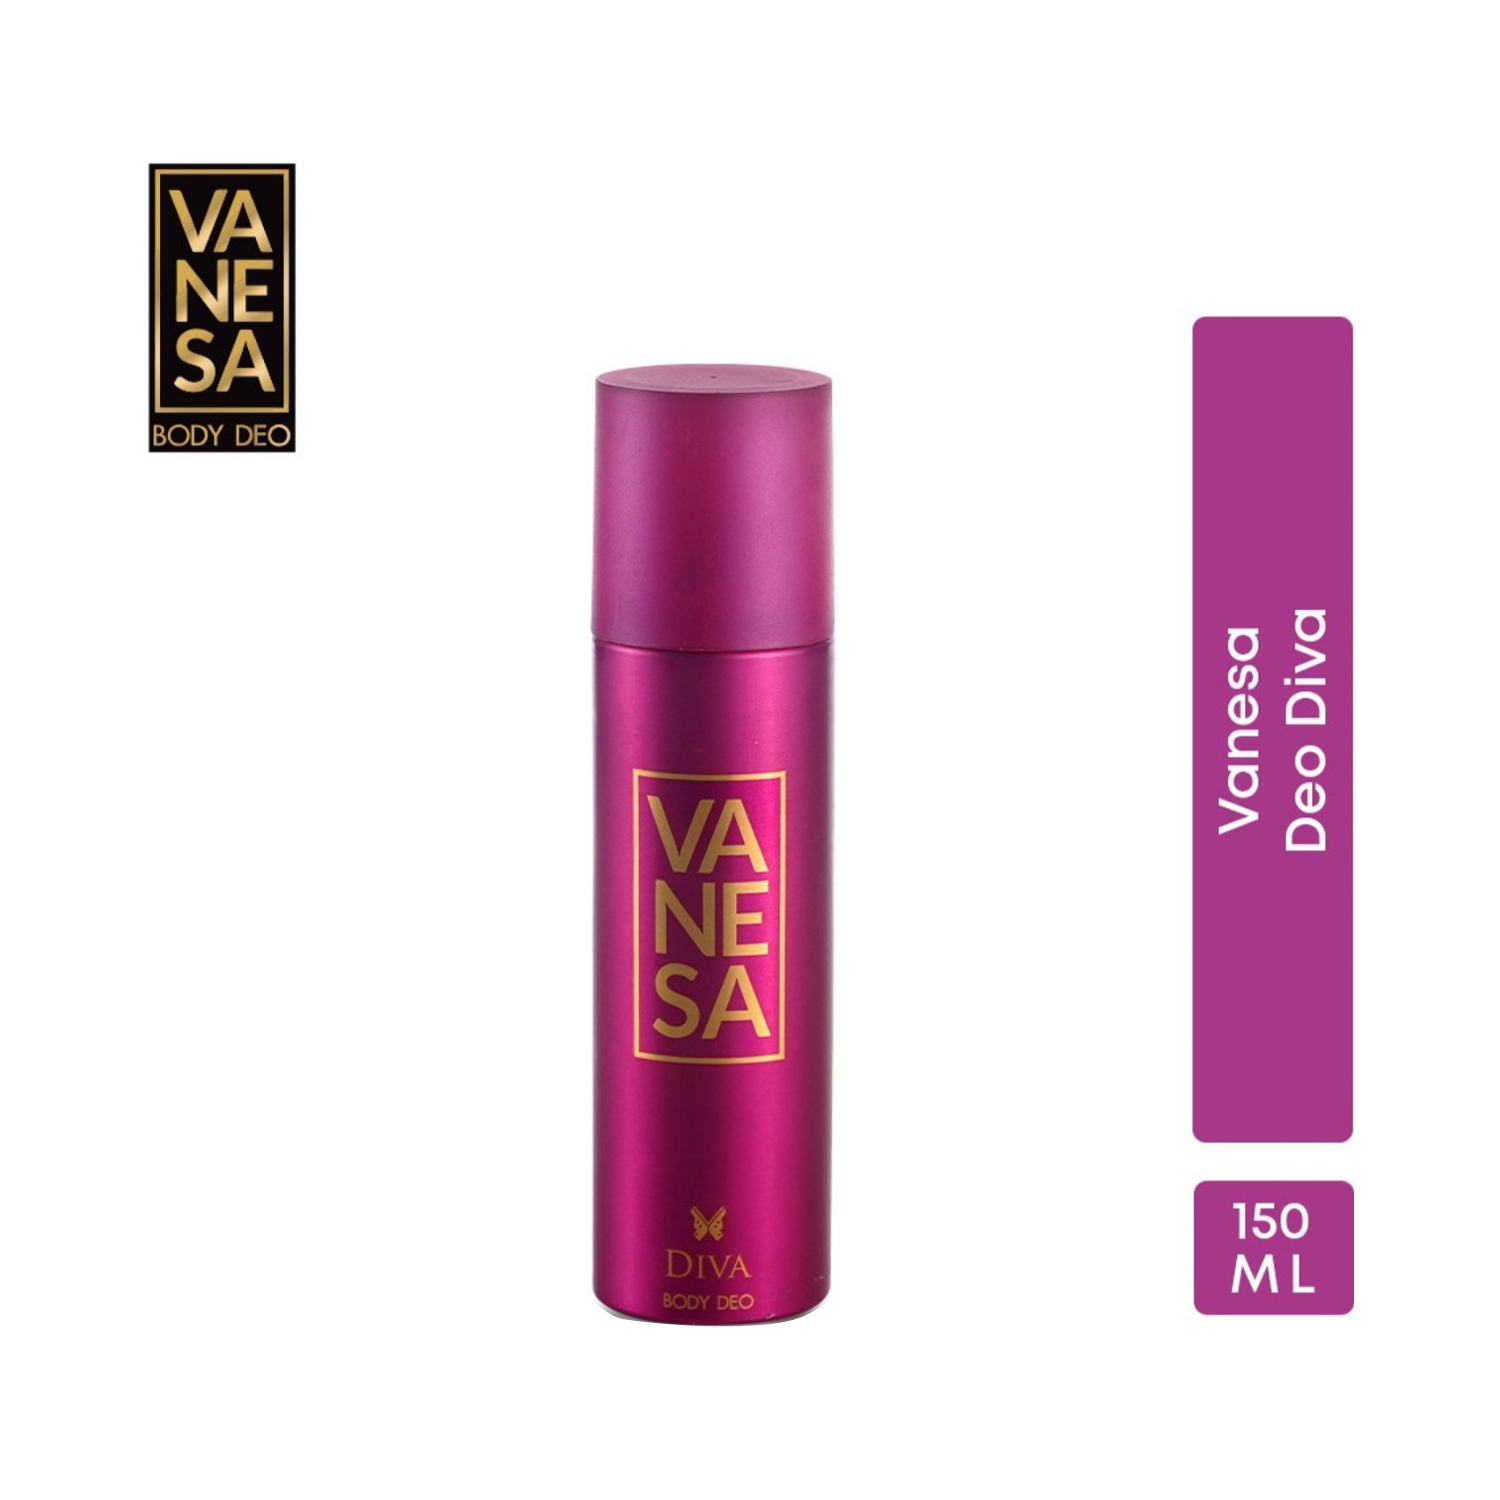 Vanesa | Vanesa Diva Deodorant Body Spray (150ml)